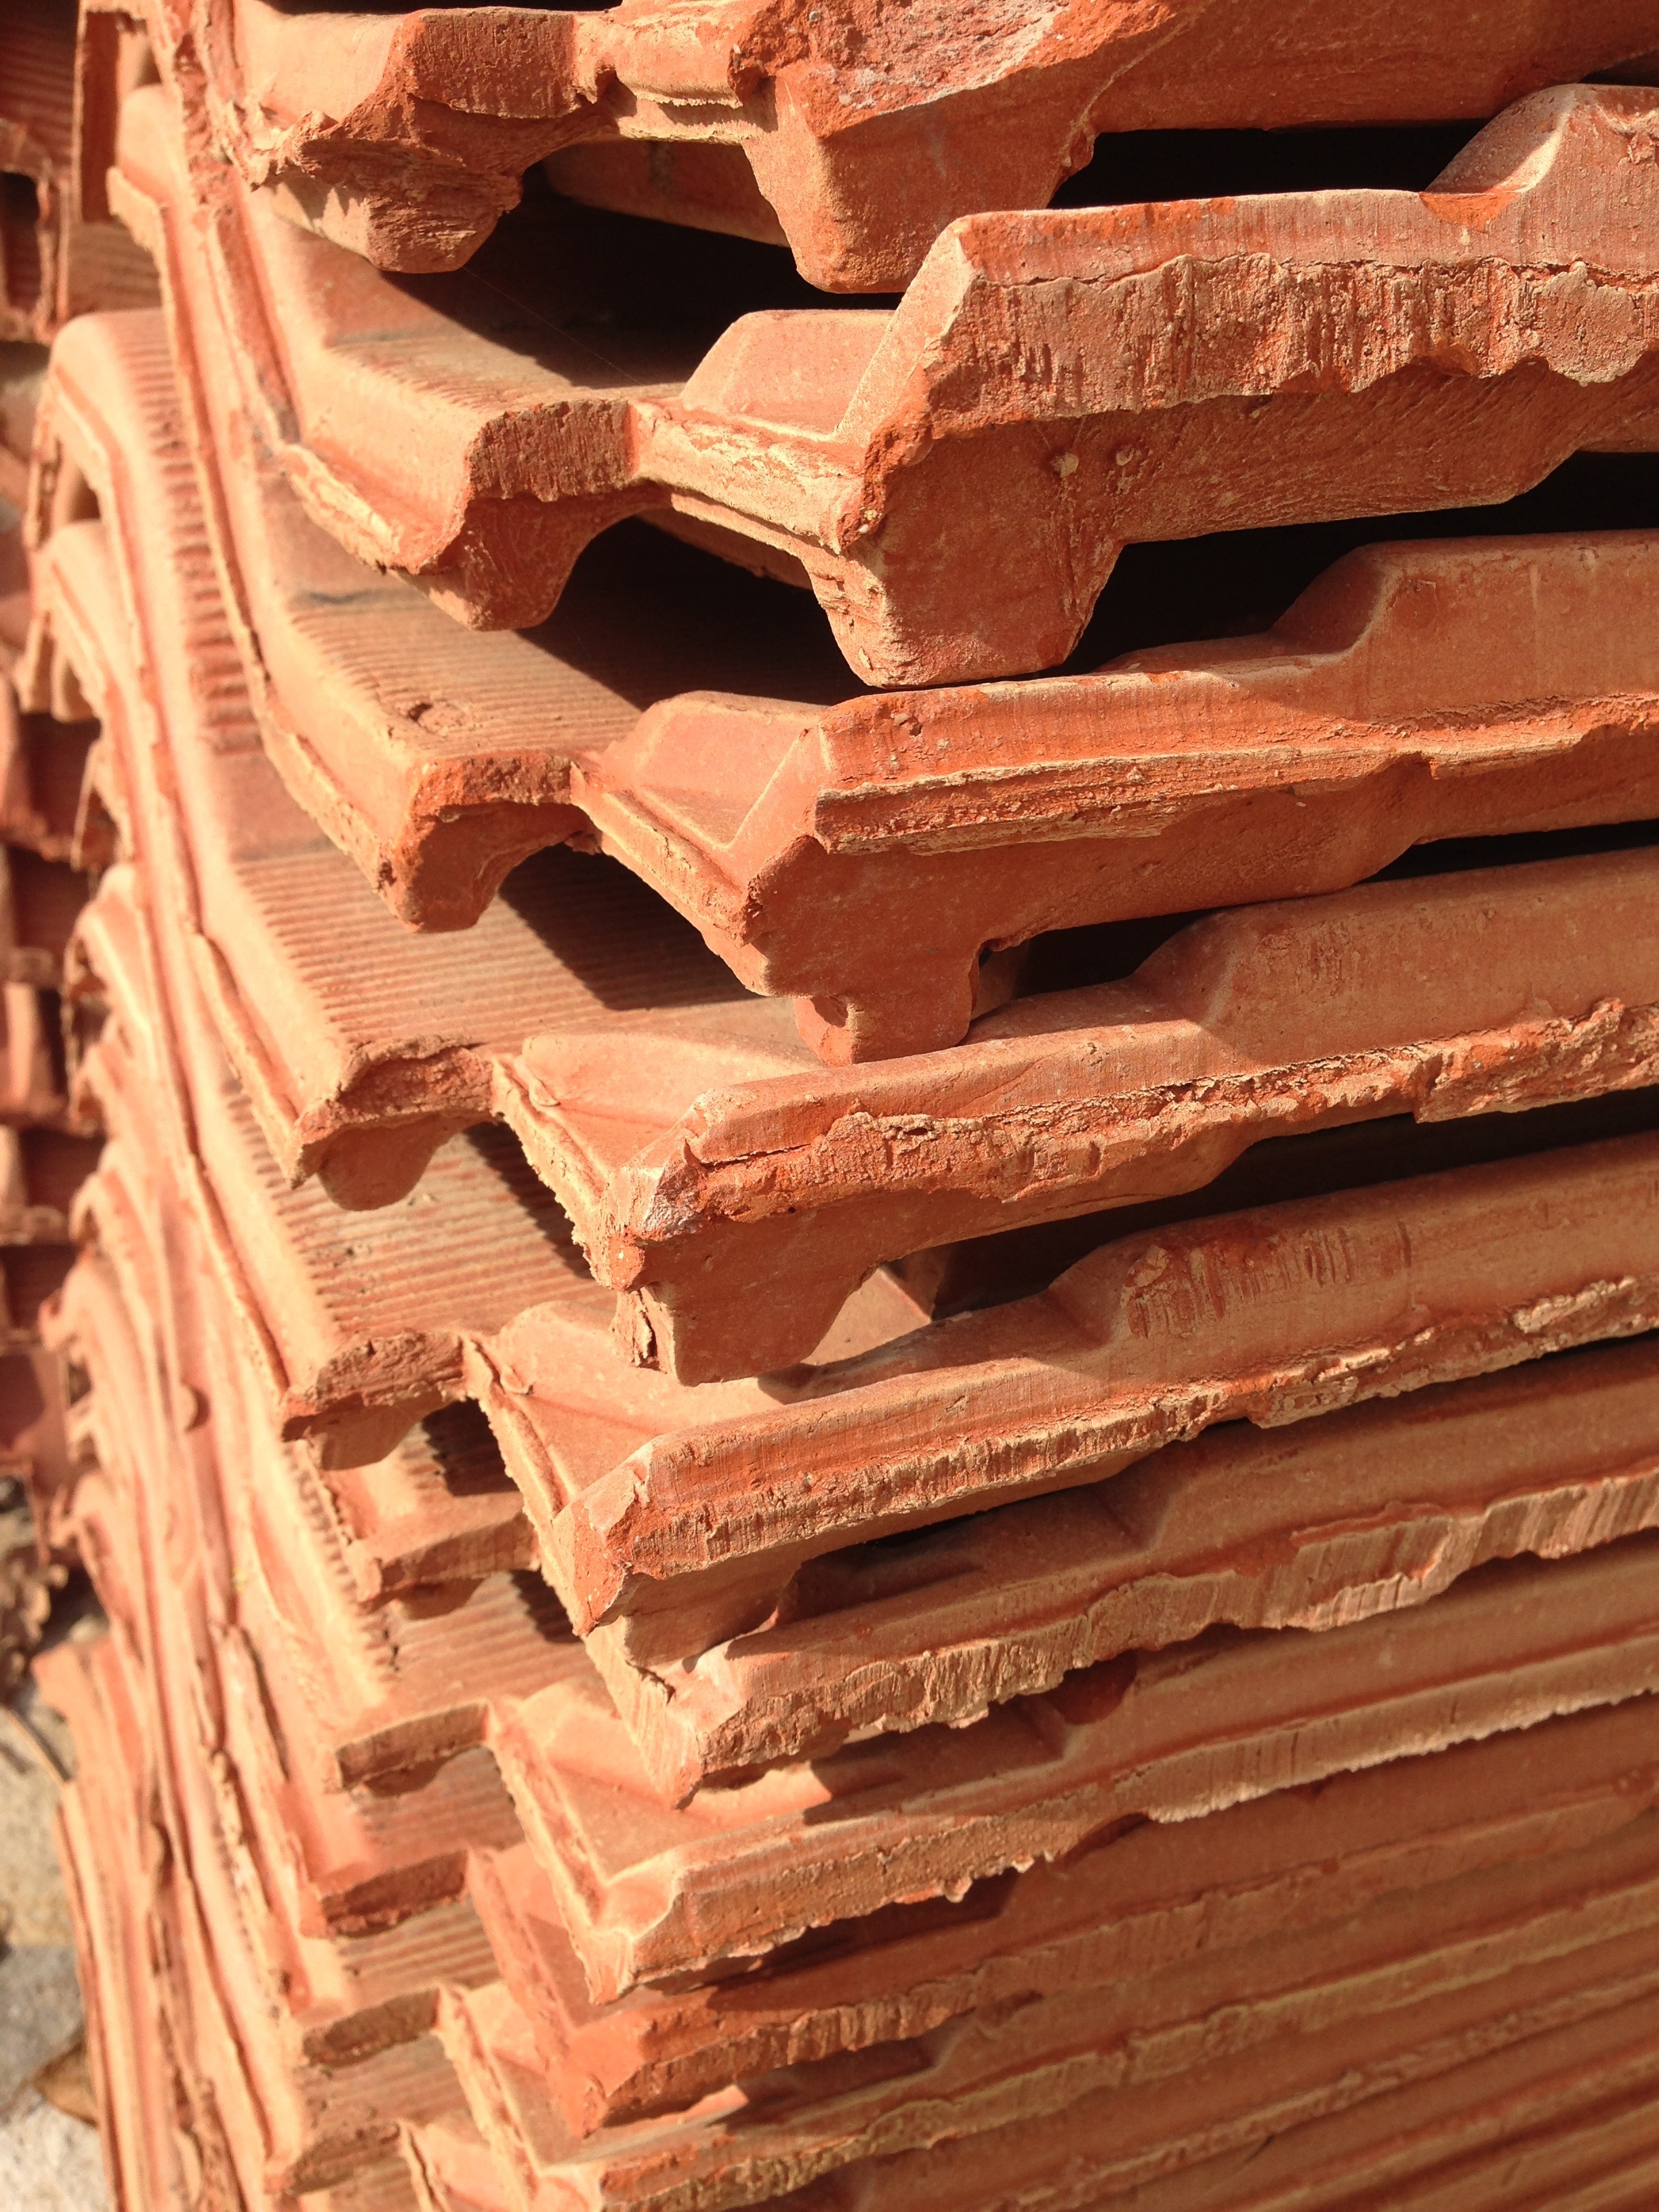 piled brown clay bricks